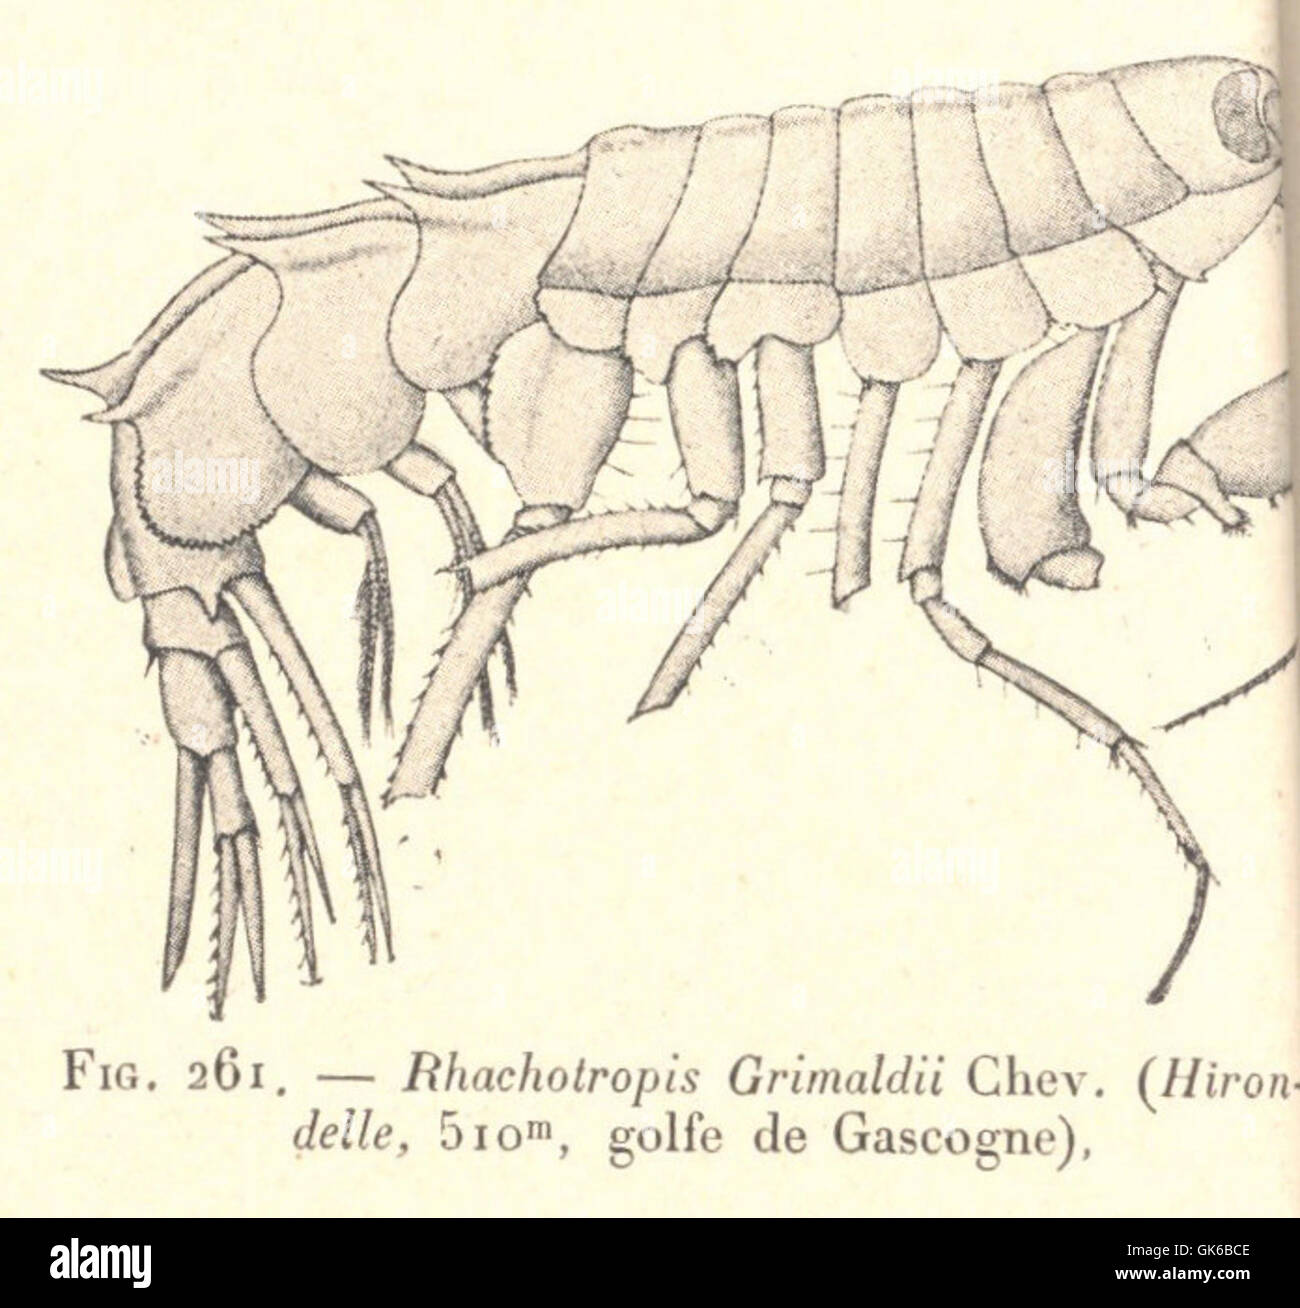 53344 Rhachotropis Grimaldii Chev (Hirondelle, 510m, golfe de Gascogne) Stock Photo